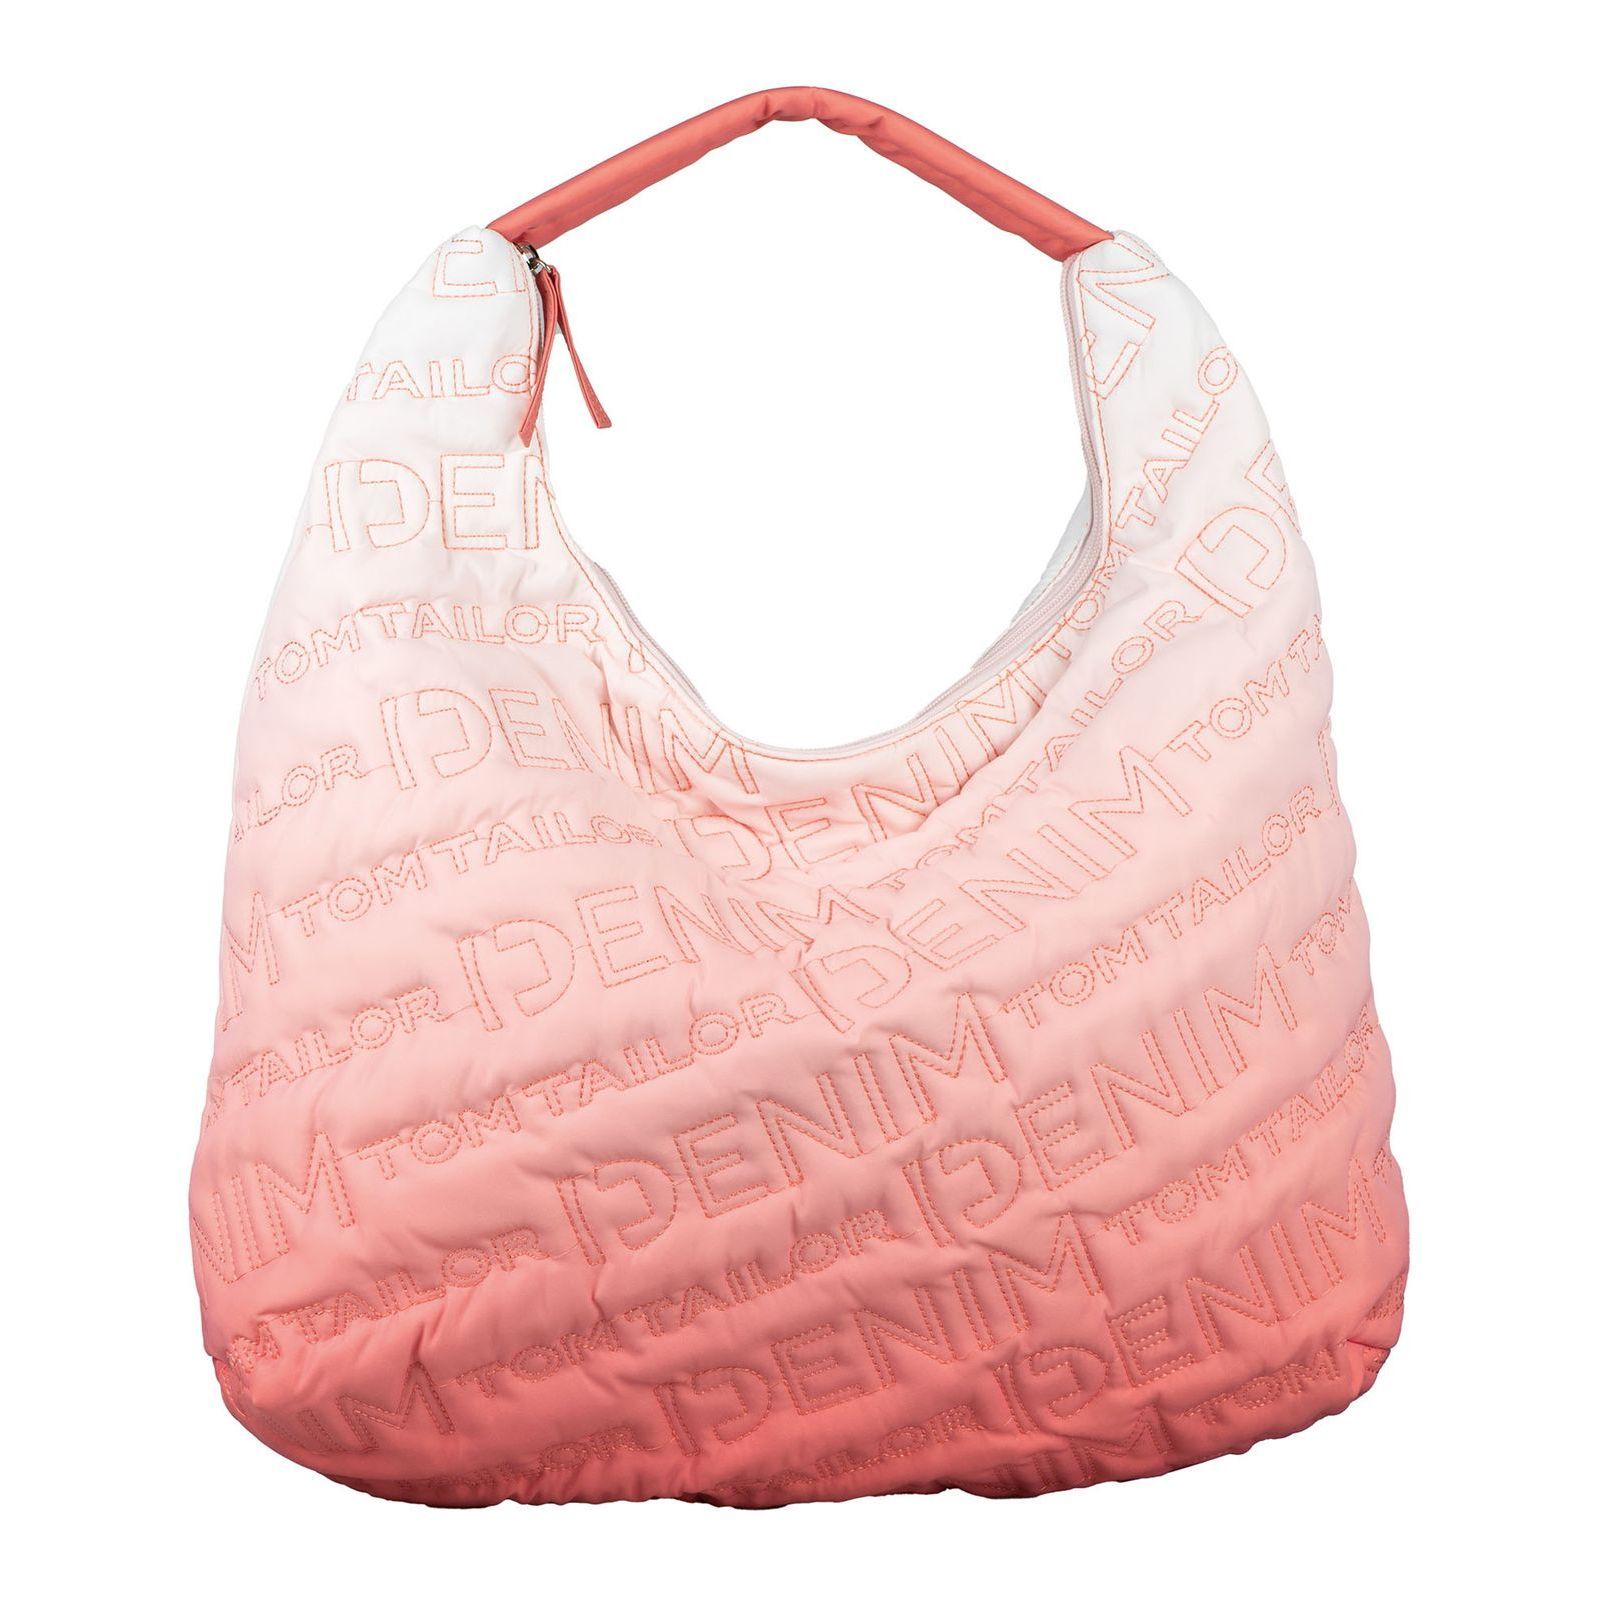 Сумка женская Tom Tailor Bags 301188 04 розовая